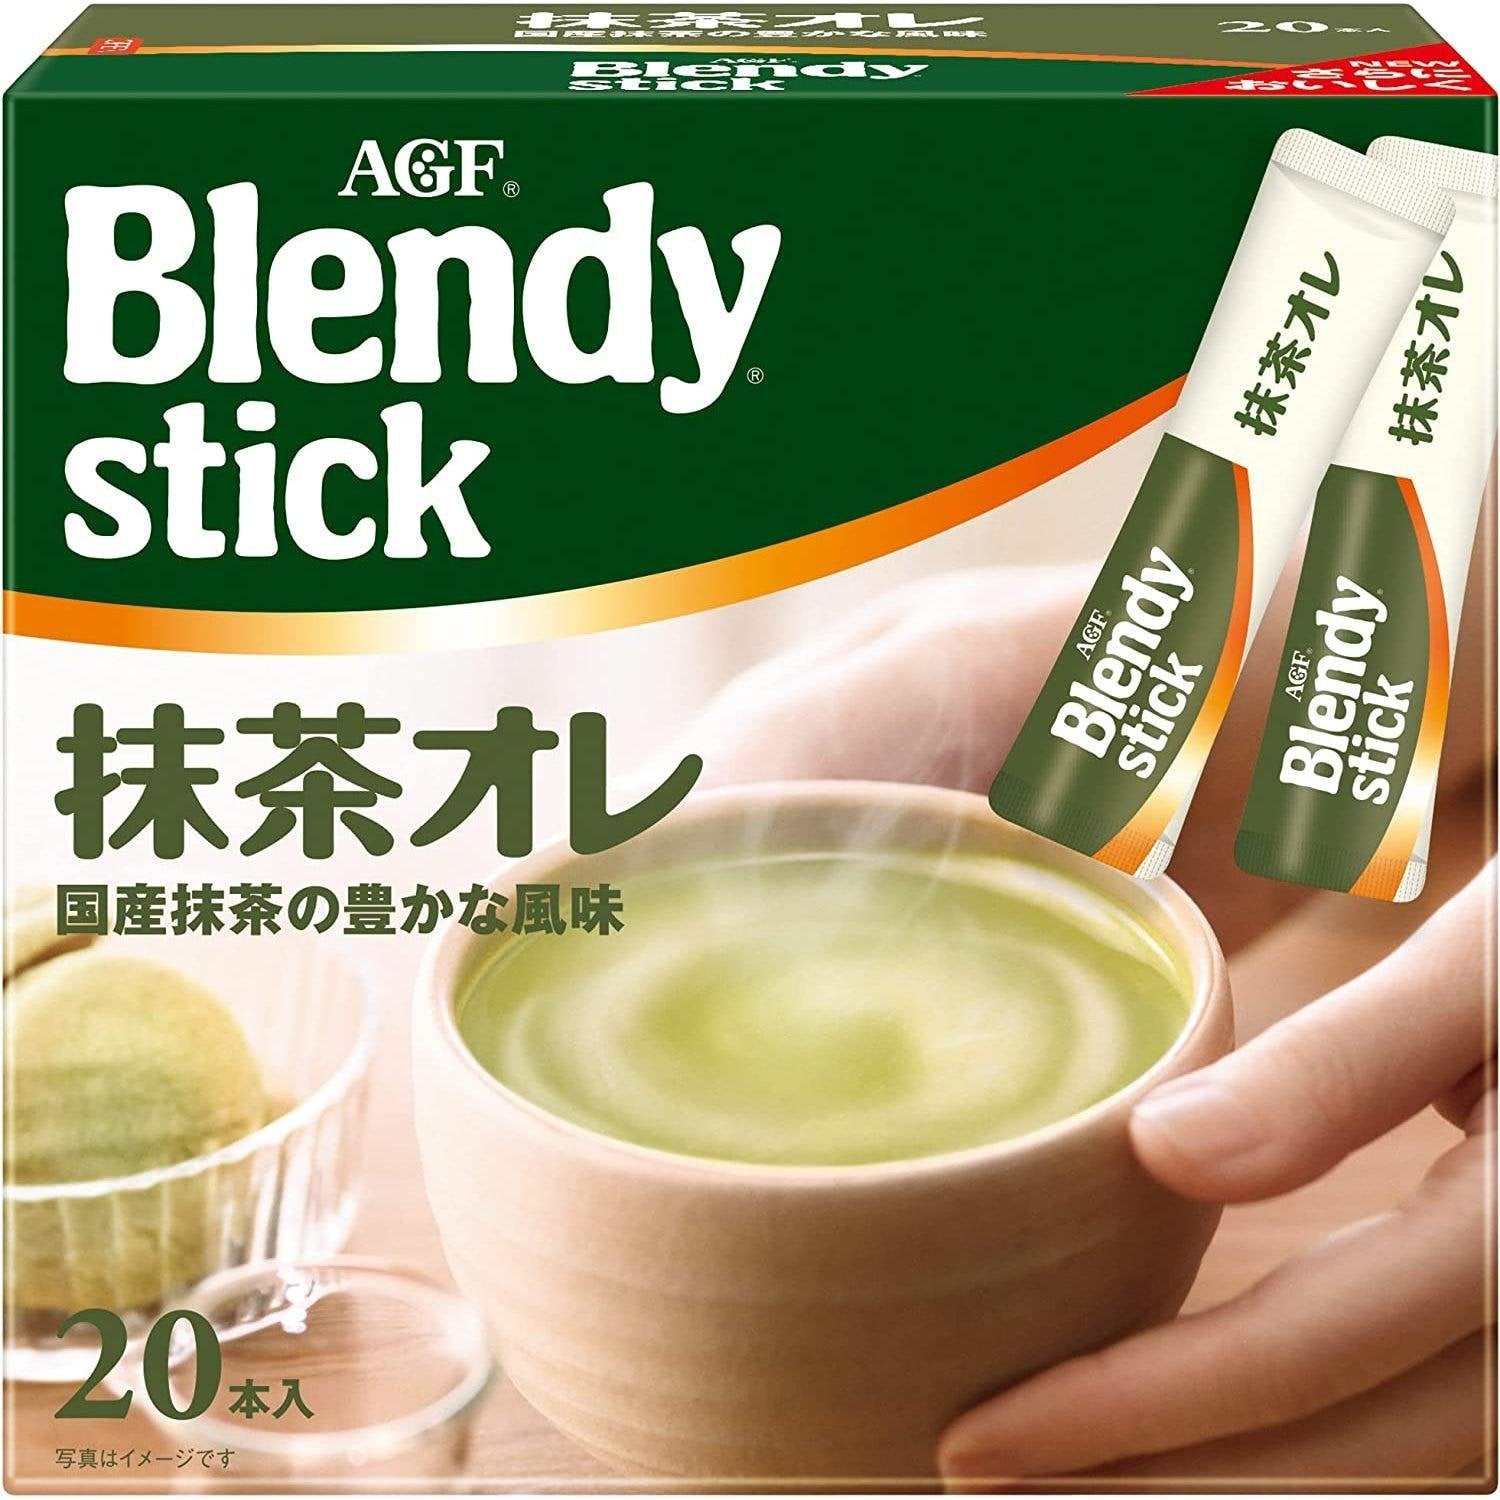 AGF Blendy Stick Matcha au Lait (Matcha Green Tea Latte) 20 Sticks